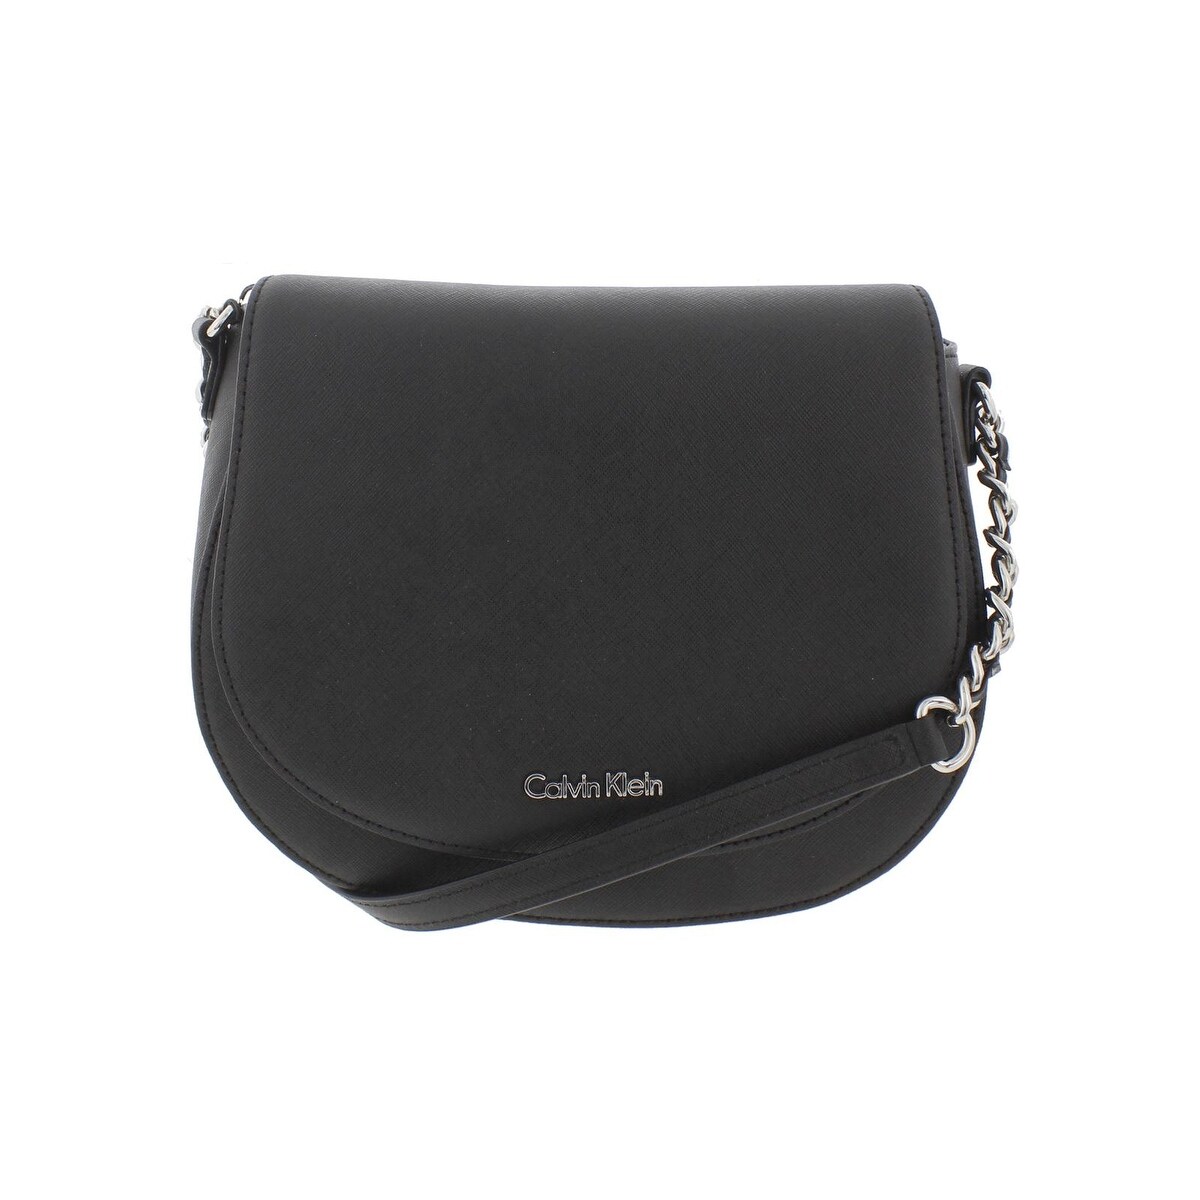 calvin klein medium saddle bag